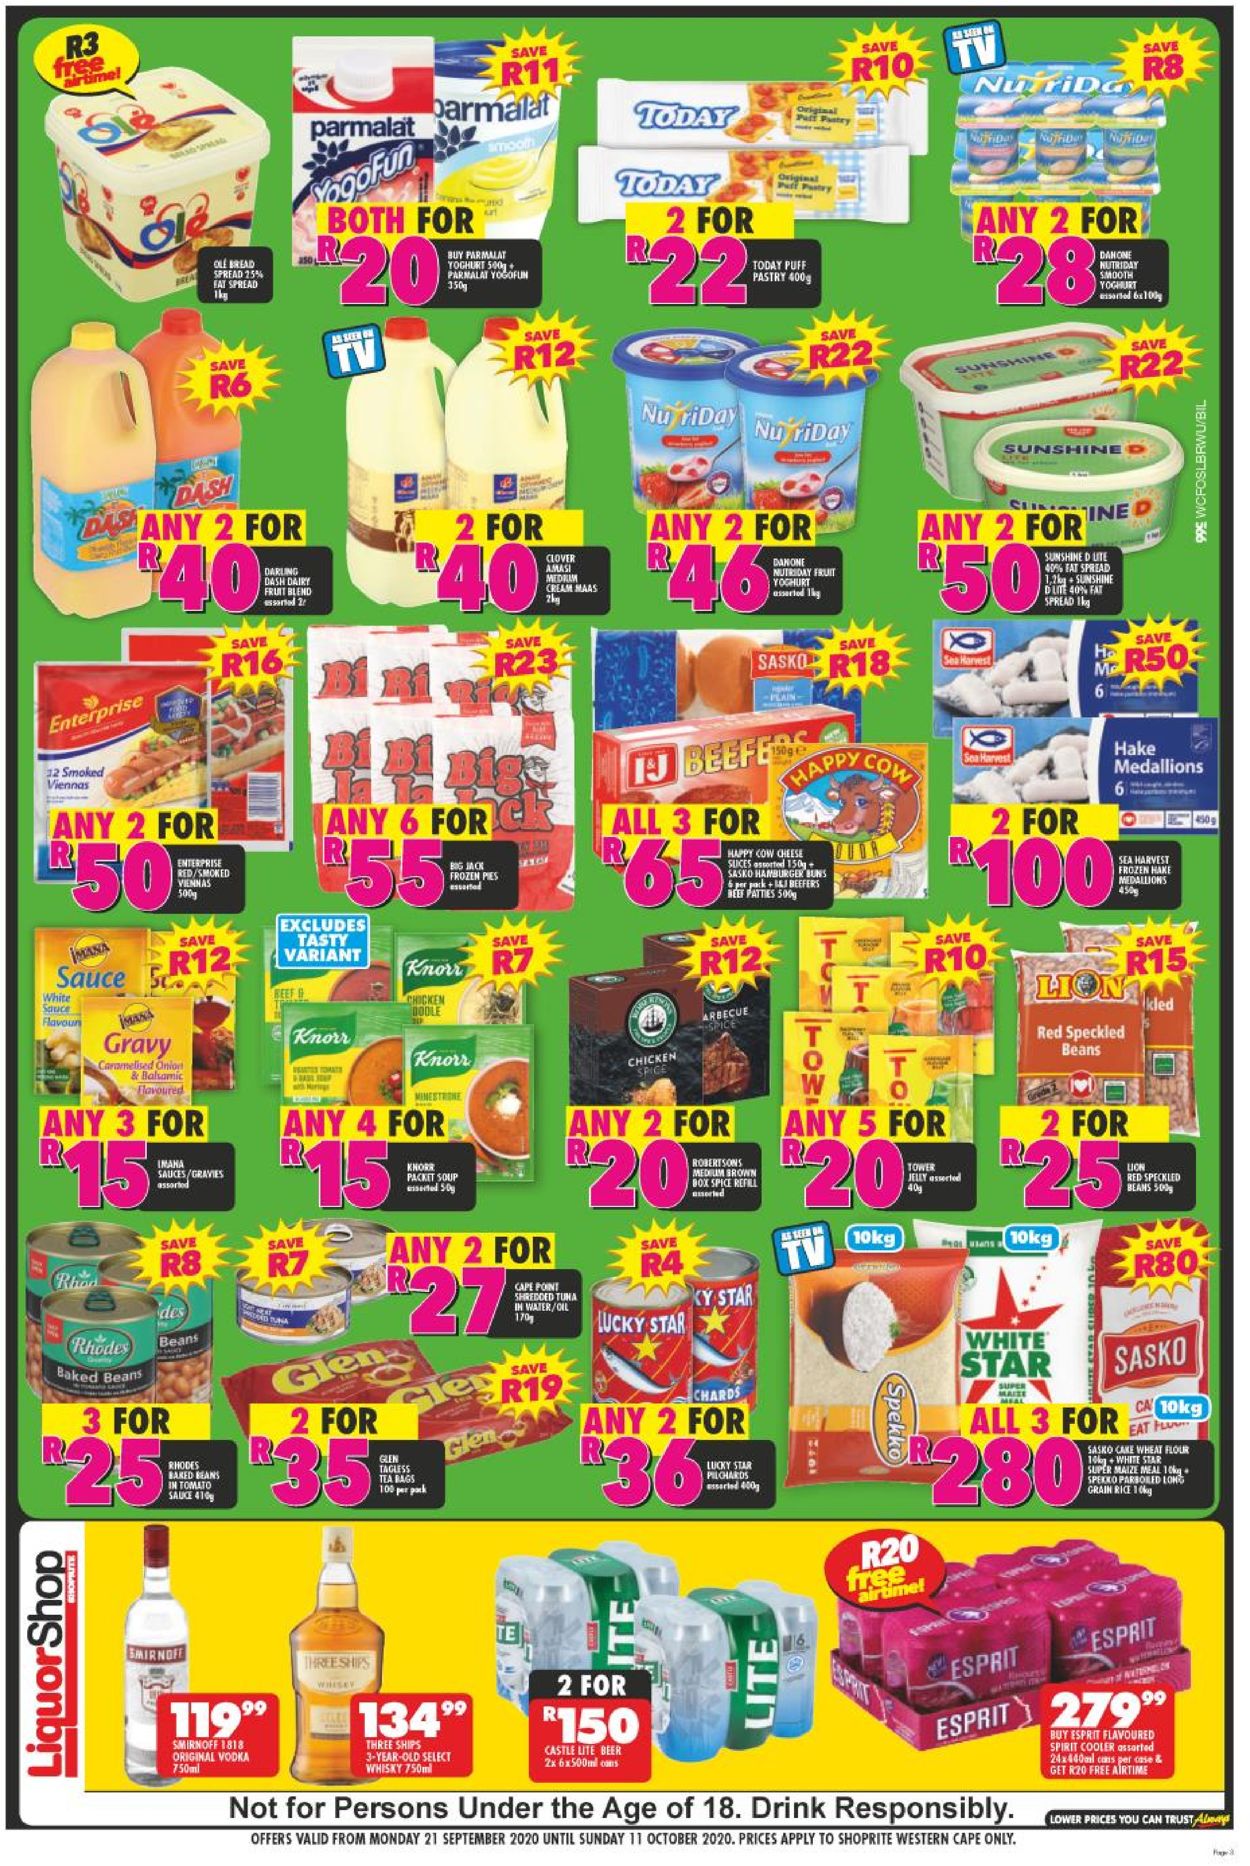 Shop Rite Free Ham 2021 Shoprite Catalogue 2020/10/12 2020/10/25